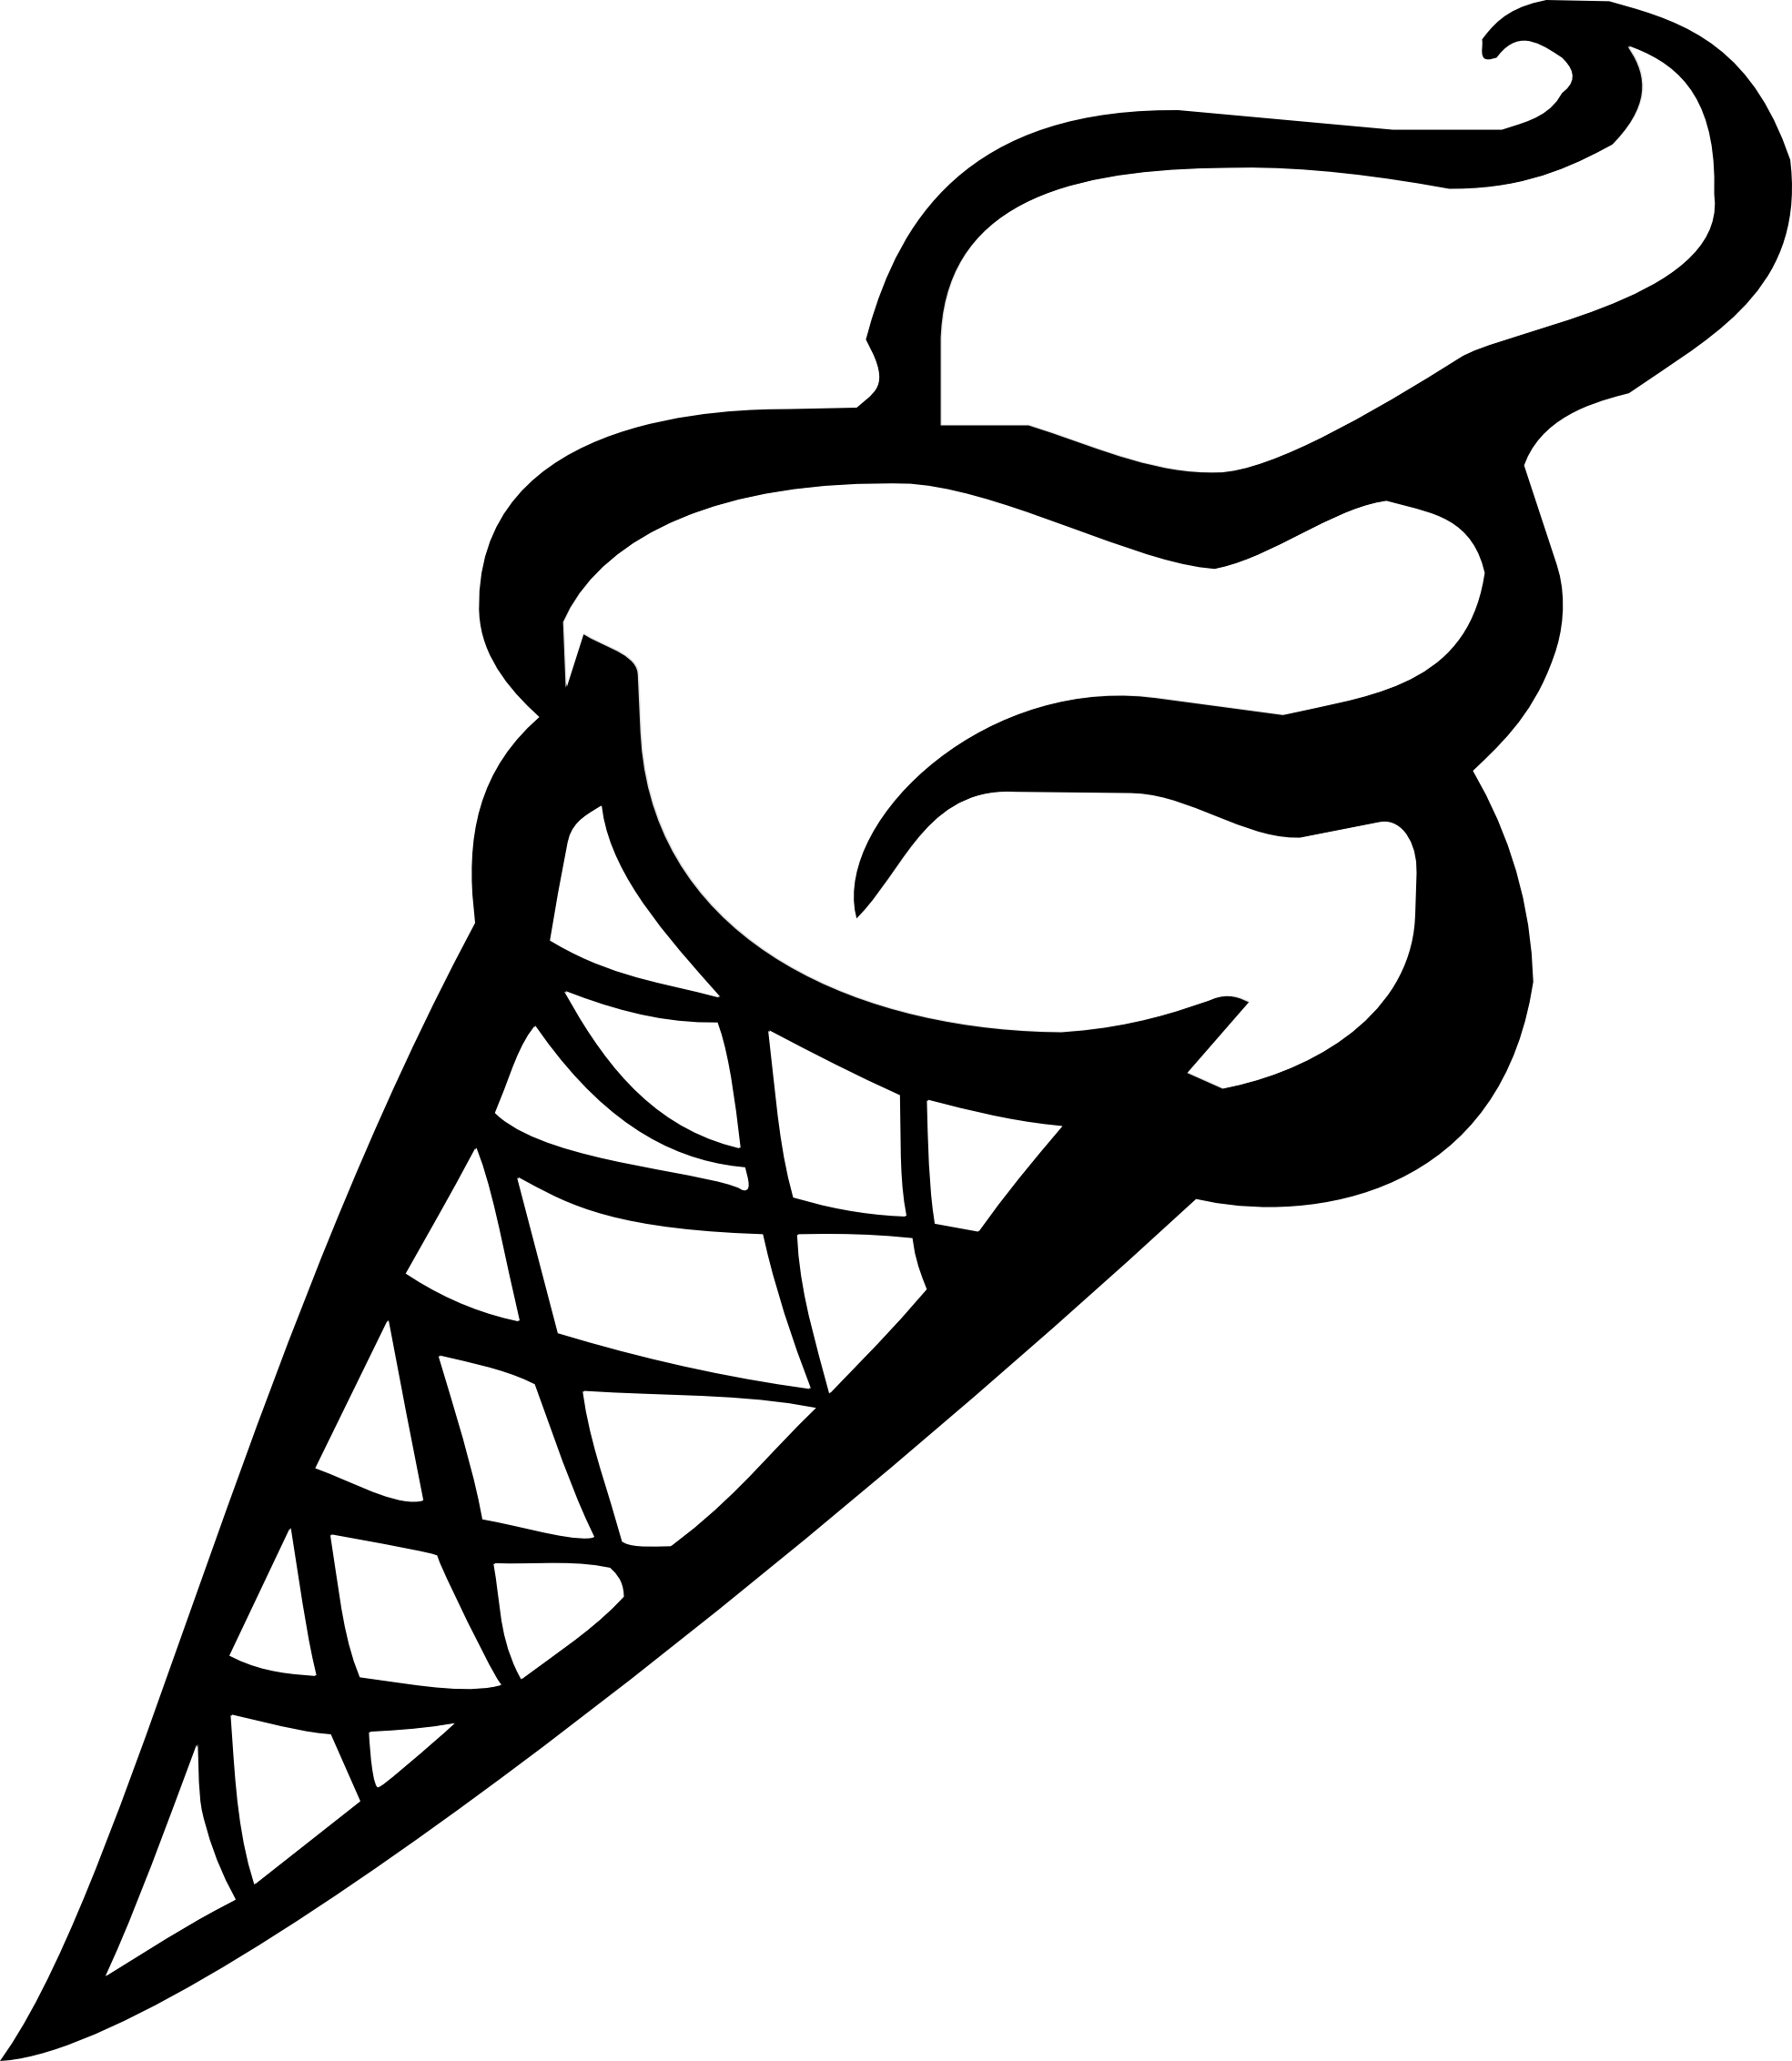 Ice cream cup clip. Clipart umbrella coloring page